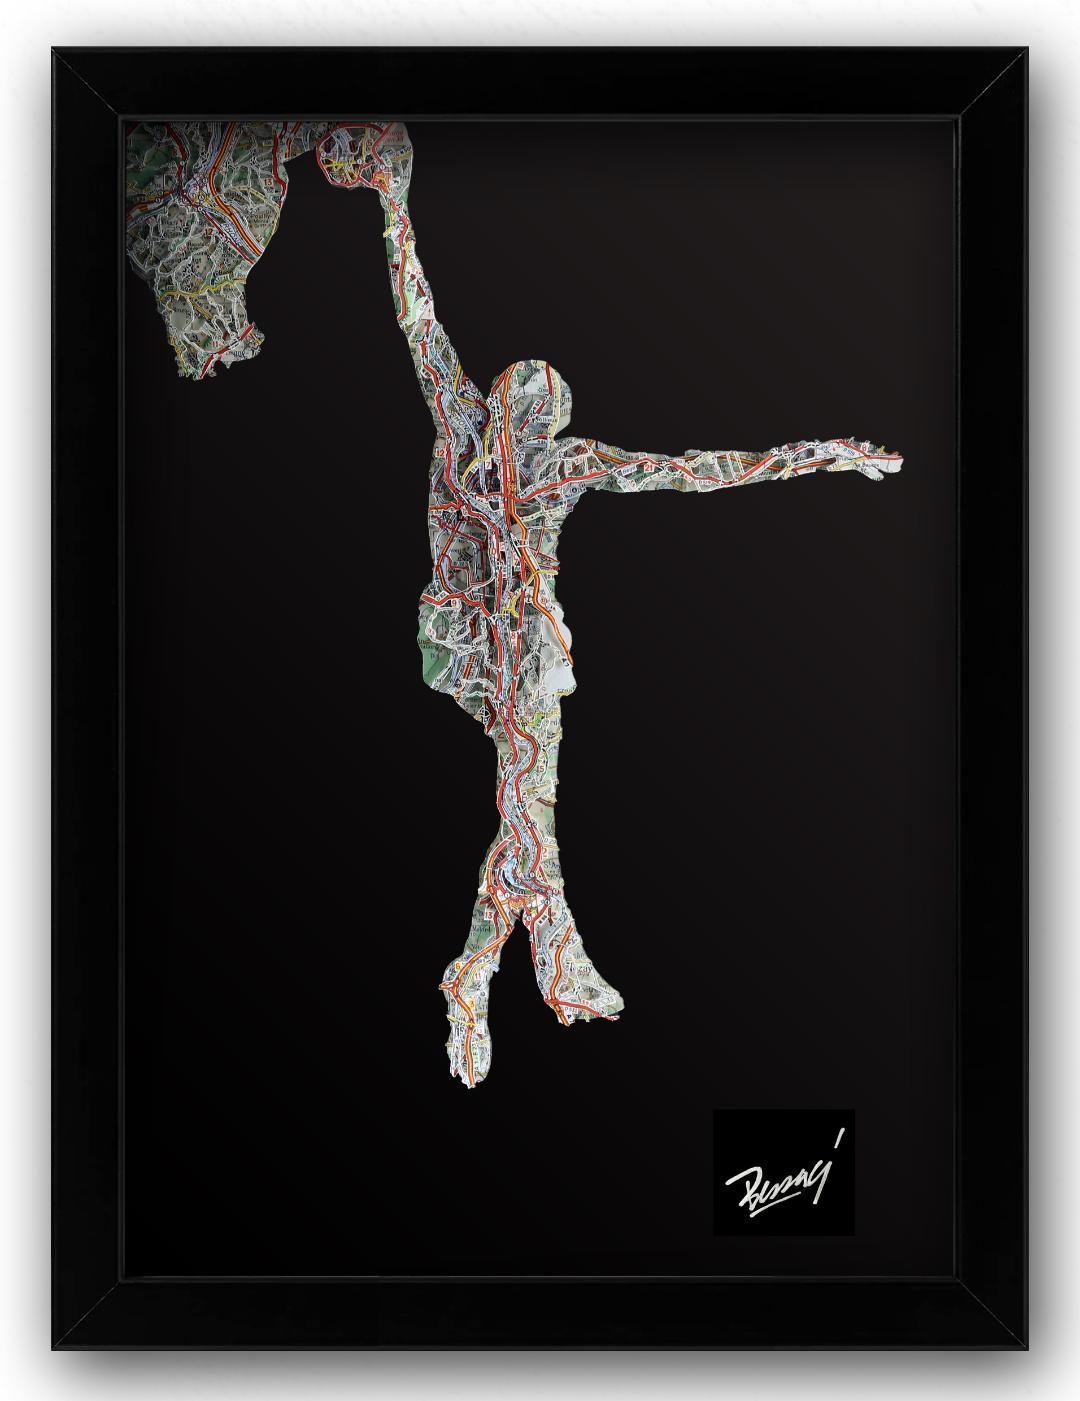 Julius Erving, cutouts, maps, sports figure, basketball - Mixed Media Art by Joanathan Bessaci